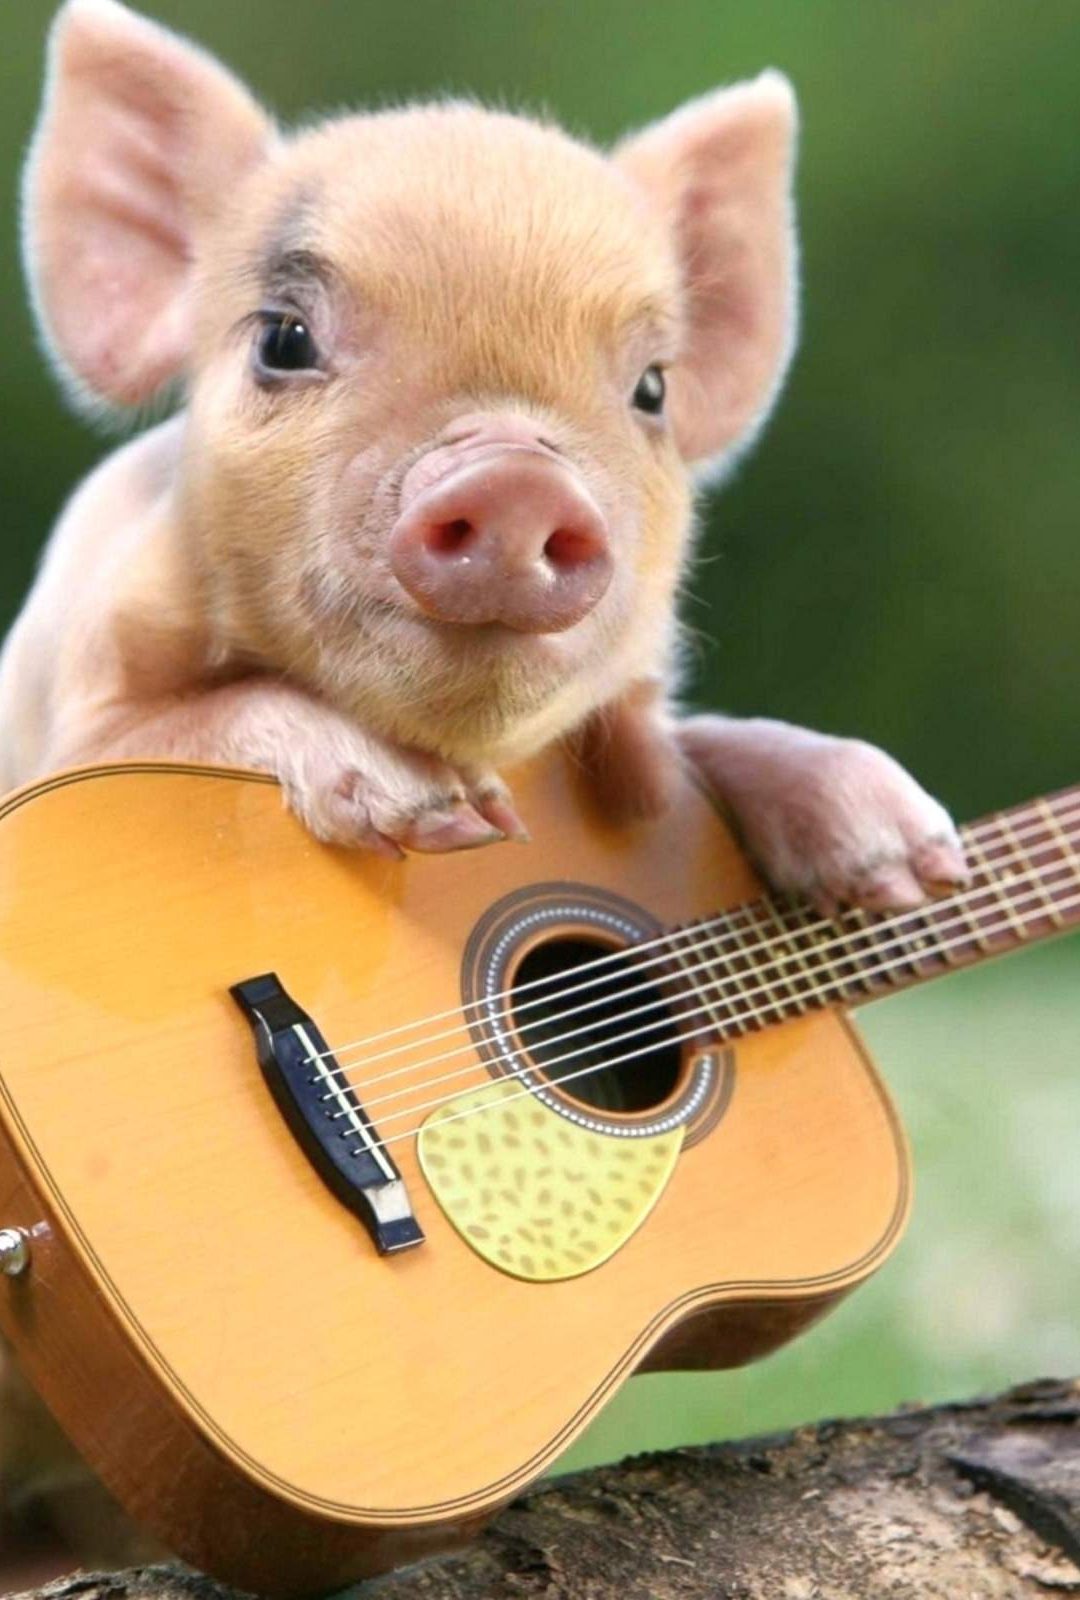 fotos lindas para fondo de pantalla,guitarra,cerdo domestico,instrumento musical,hocico,suidae